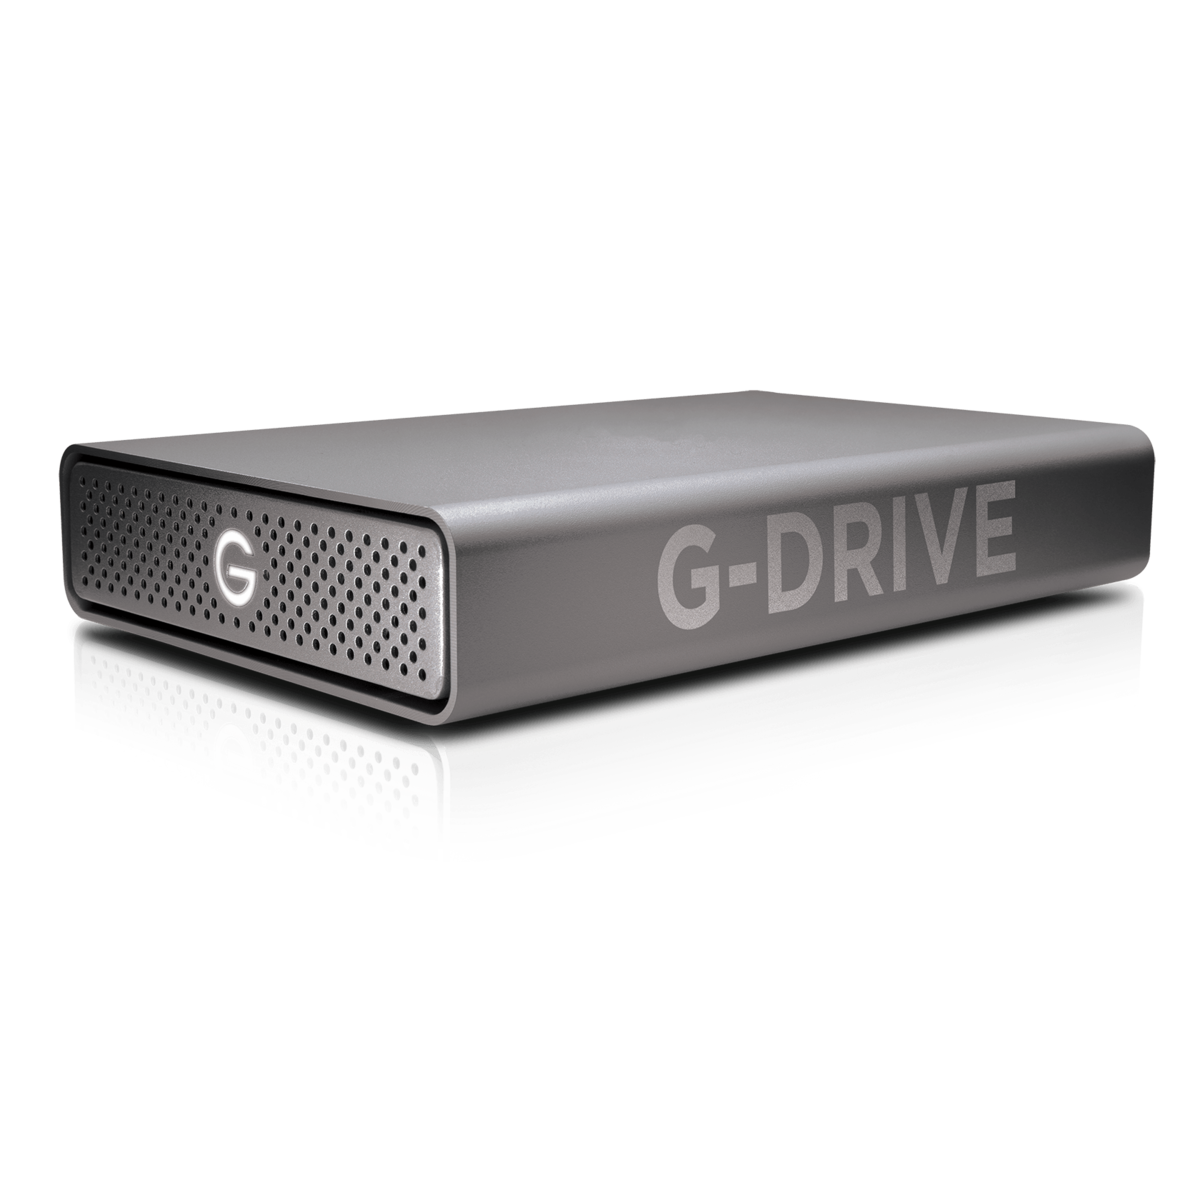 SanDisk G-DRIVE disque dur externe 12 To Acier inoxydable